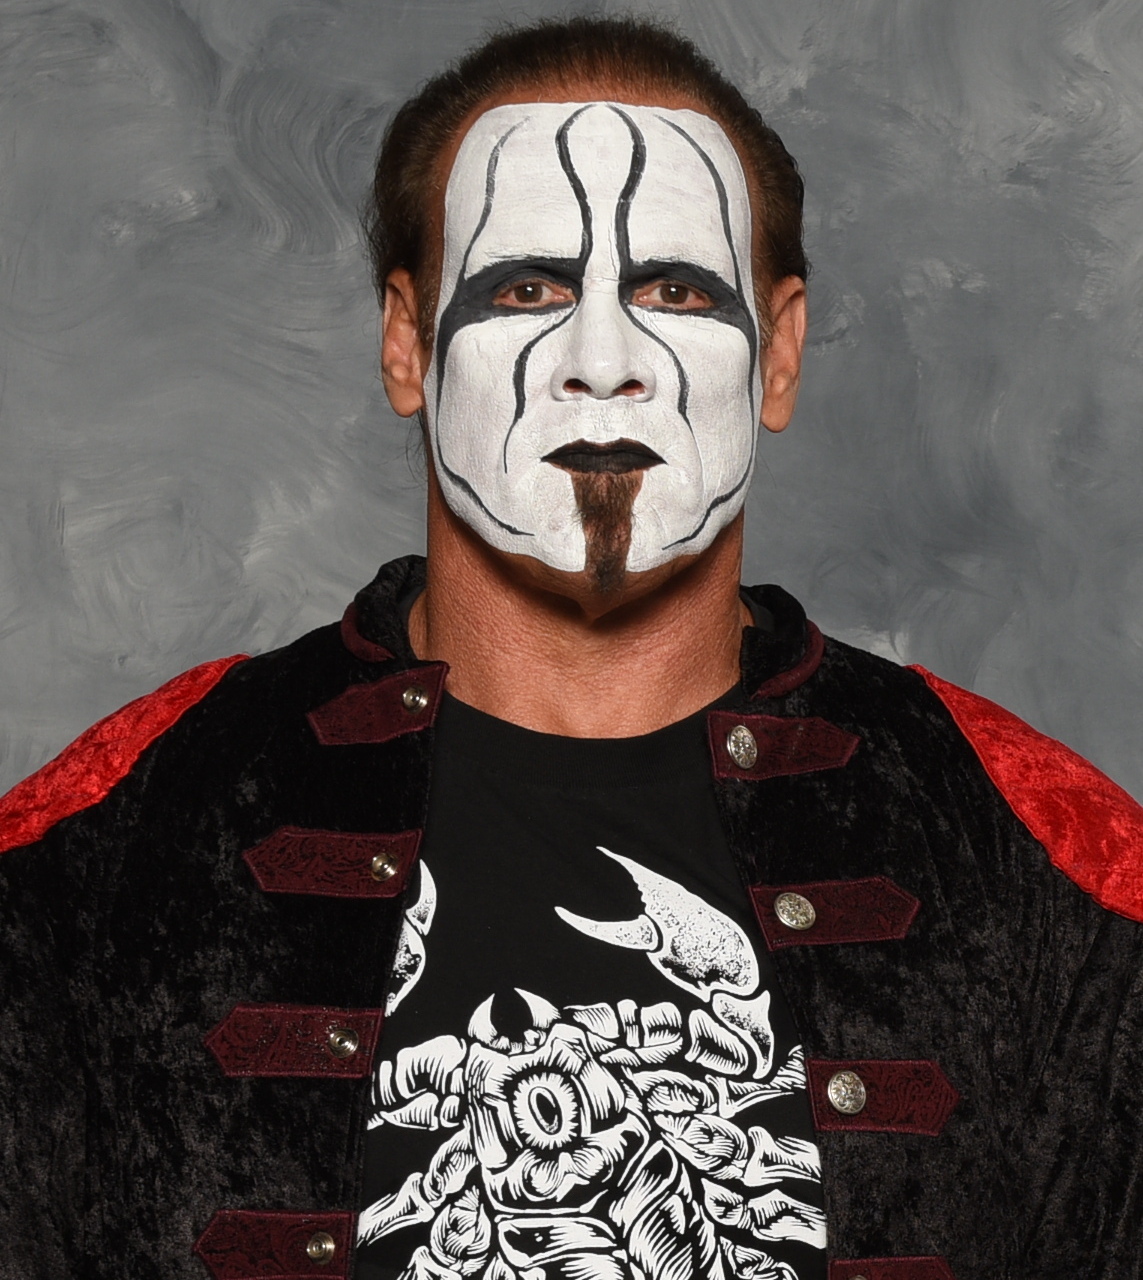 Sting Wrestler Wikipedia